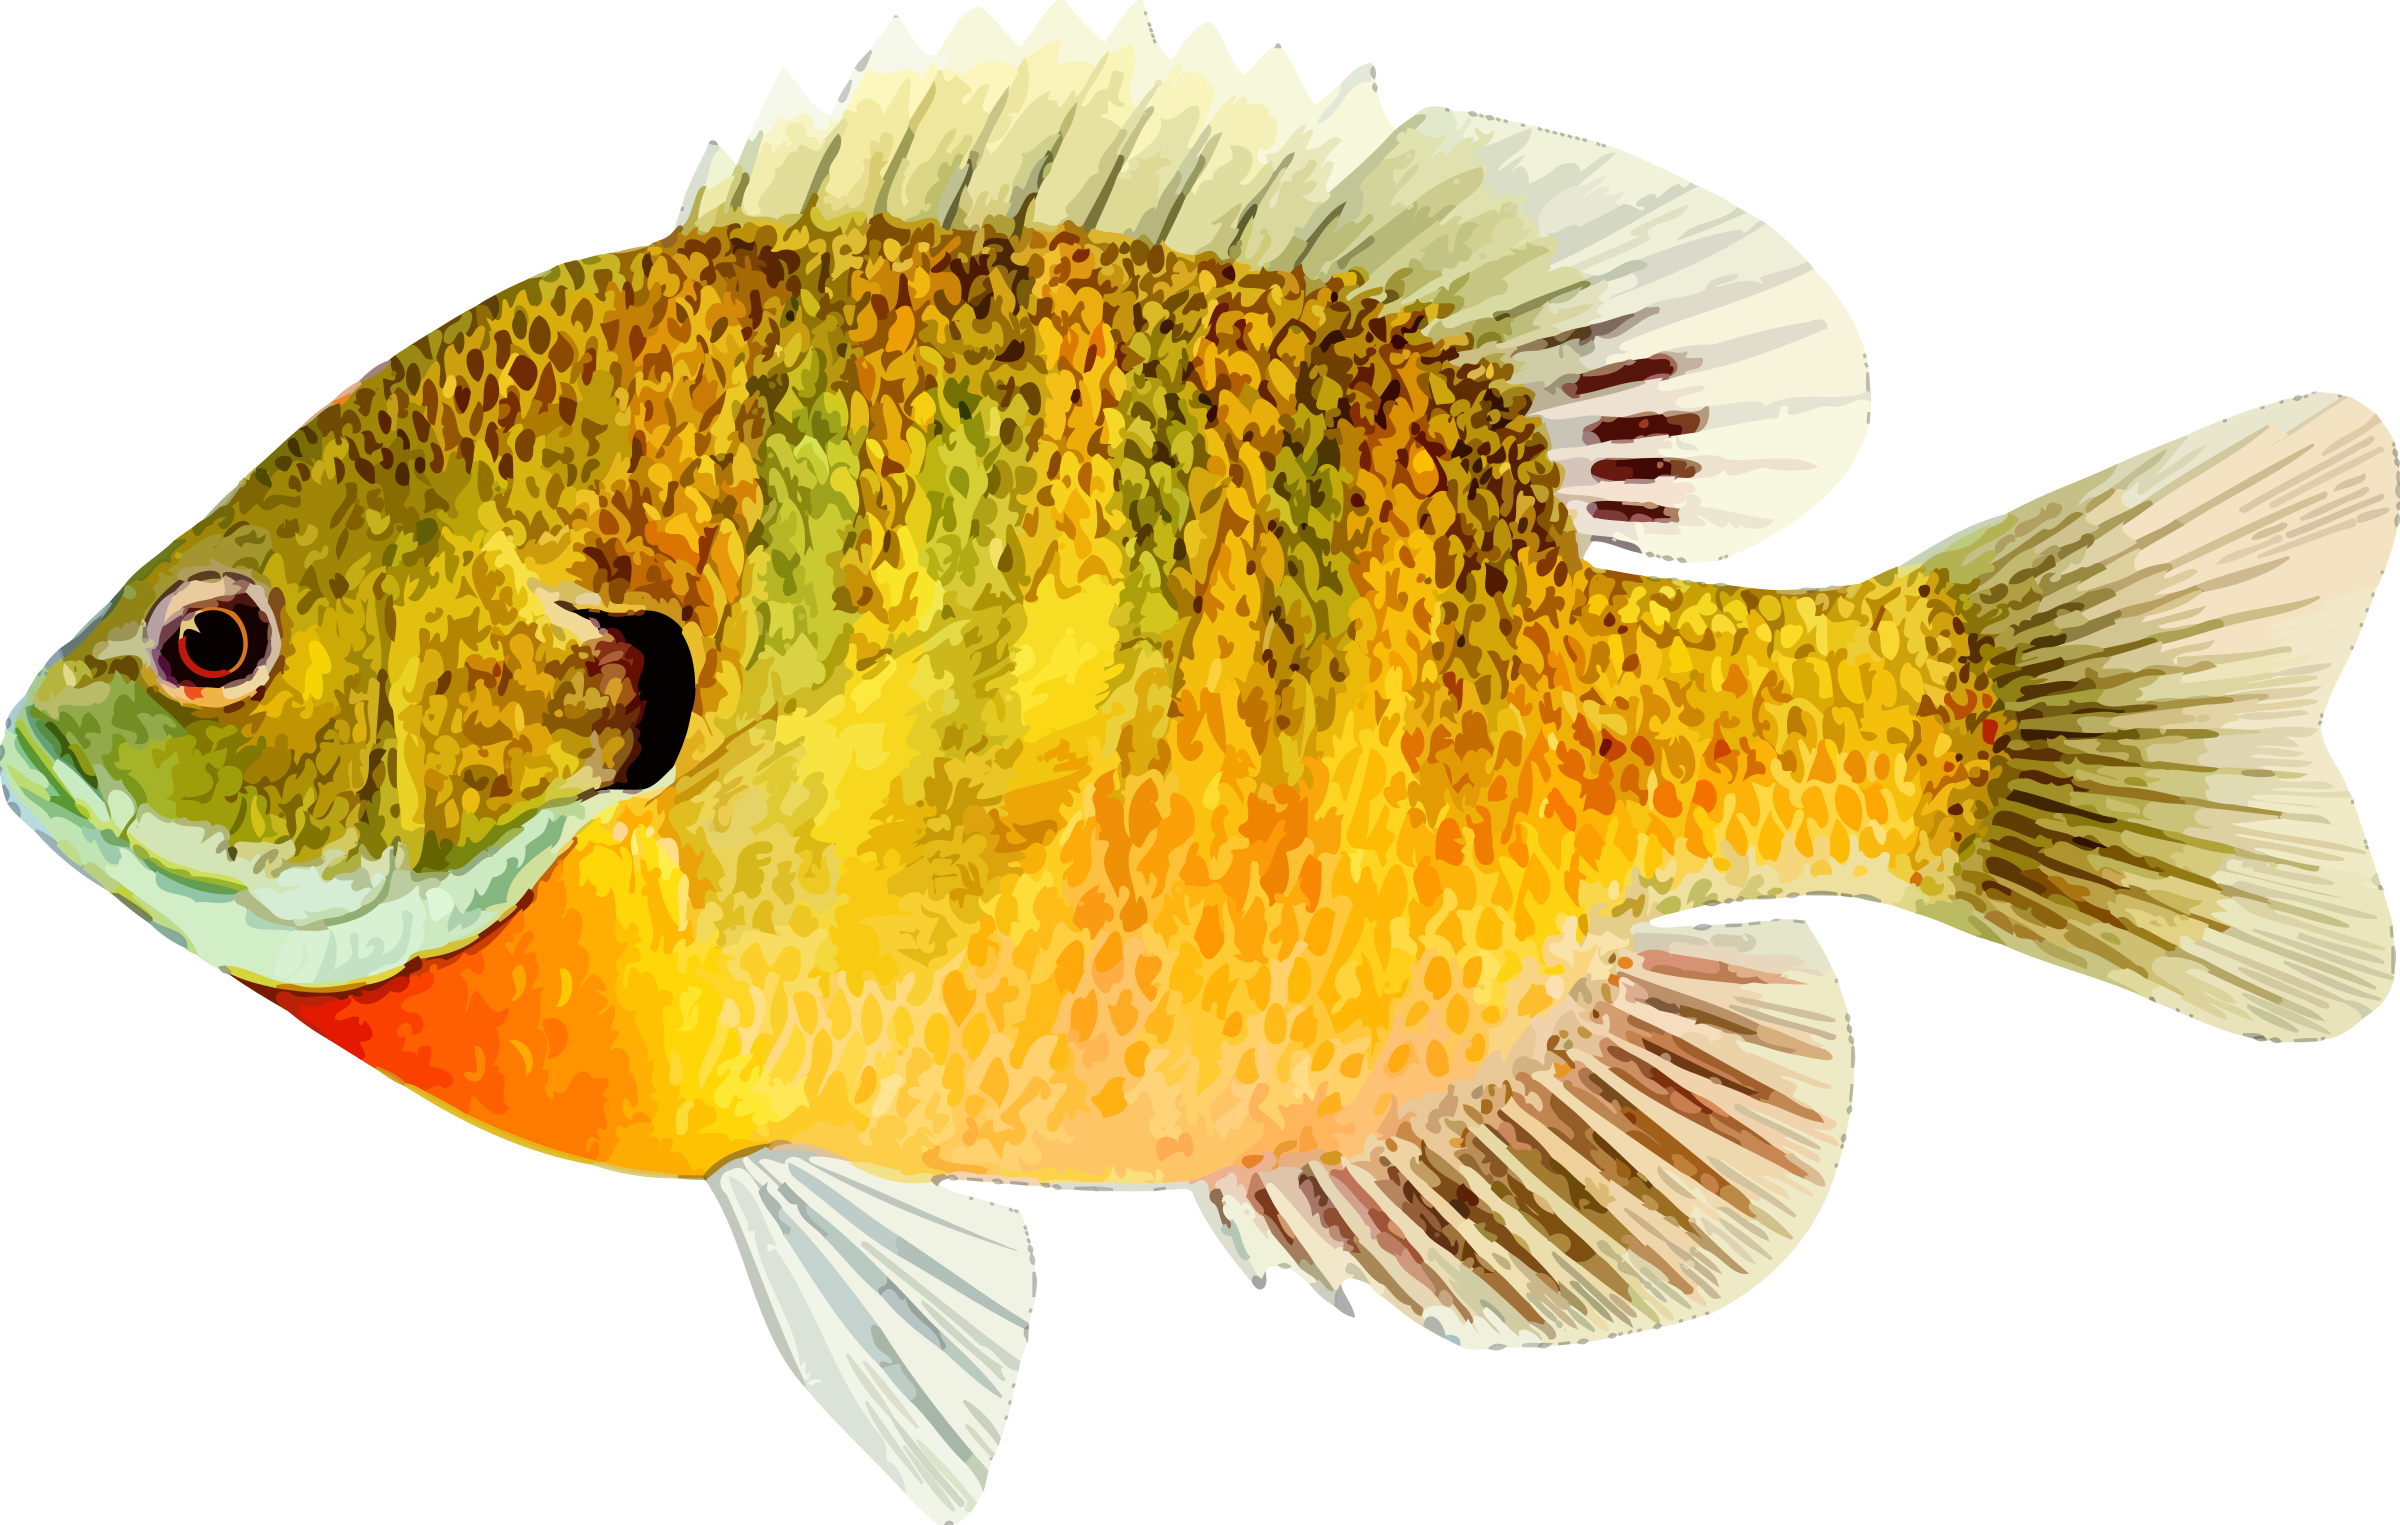 Big Image (Png) - Fish, Transparent background PNG HD thumbnail